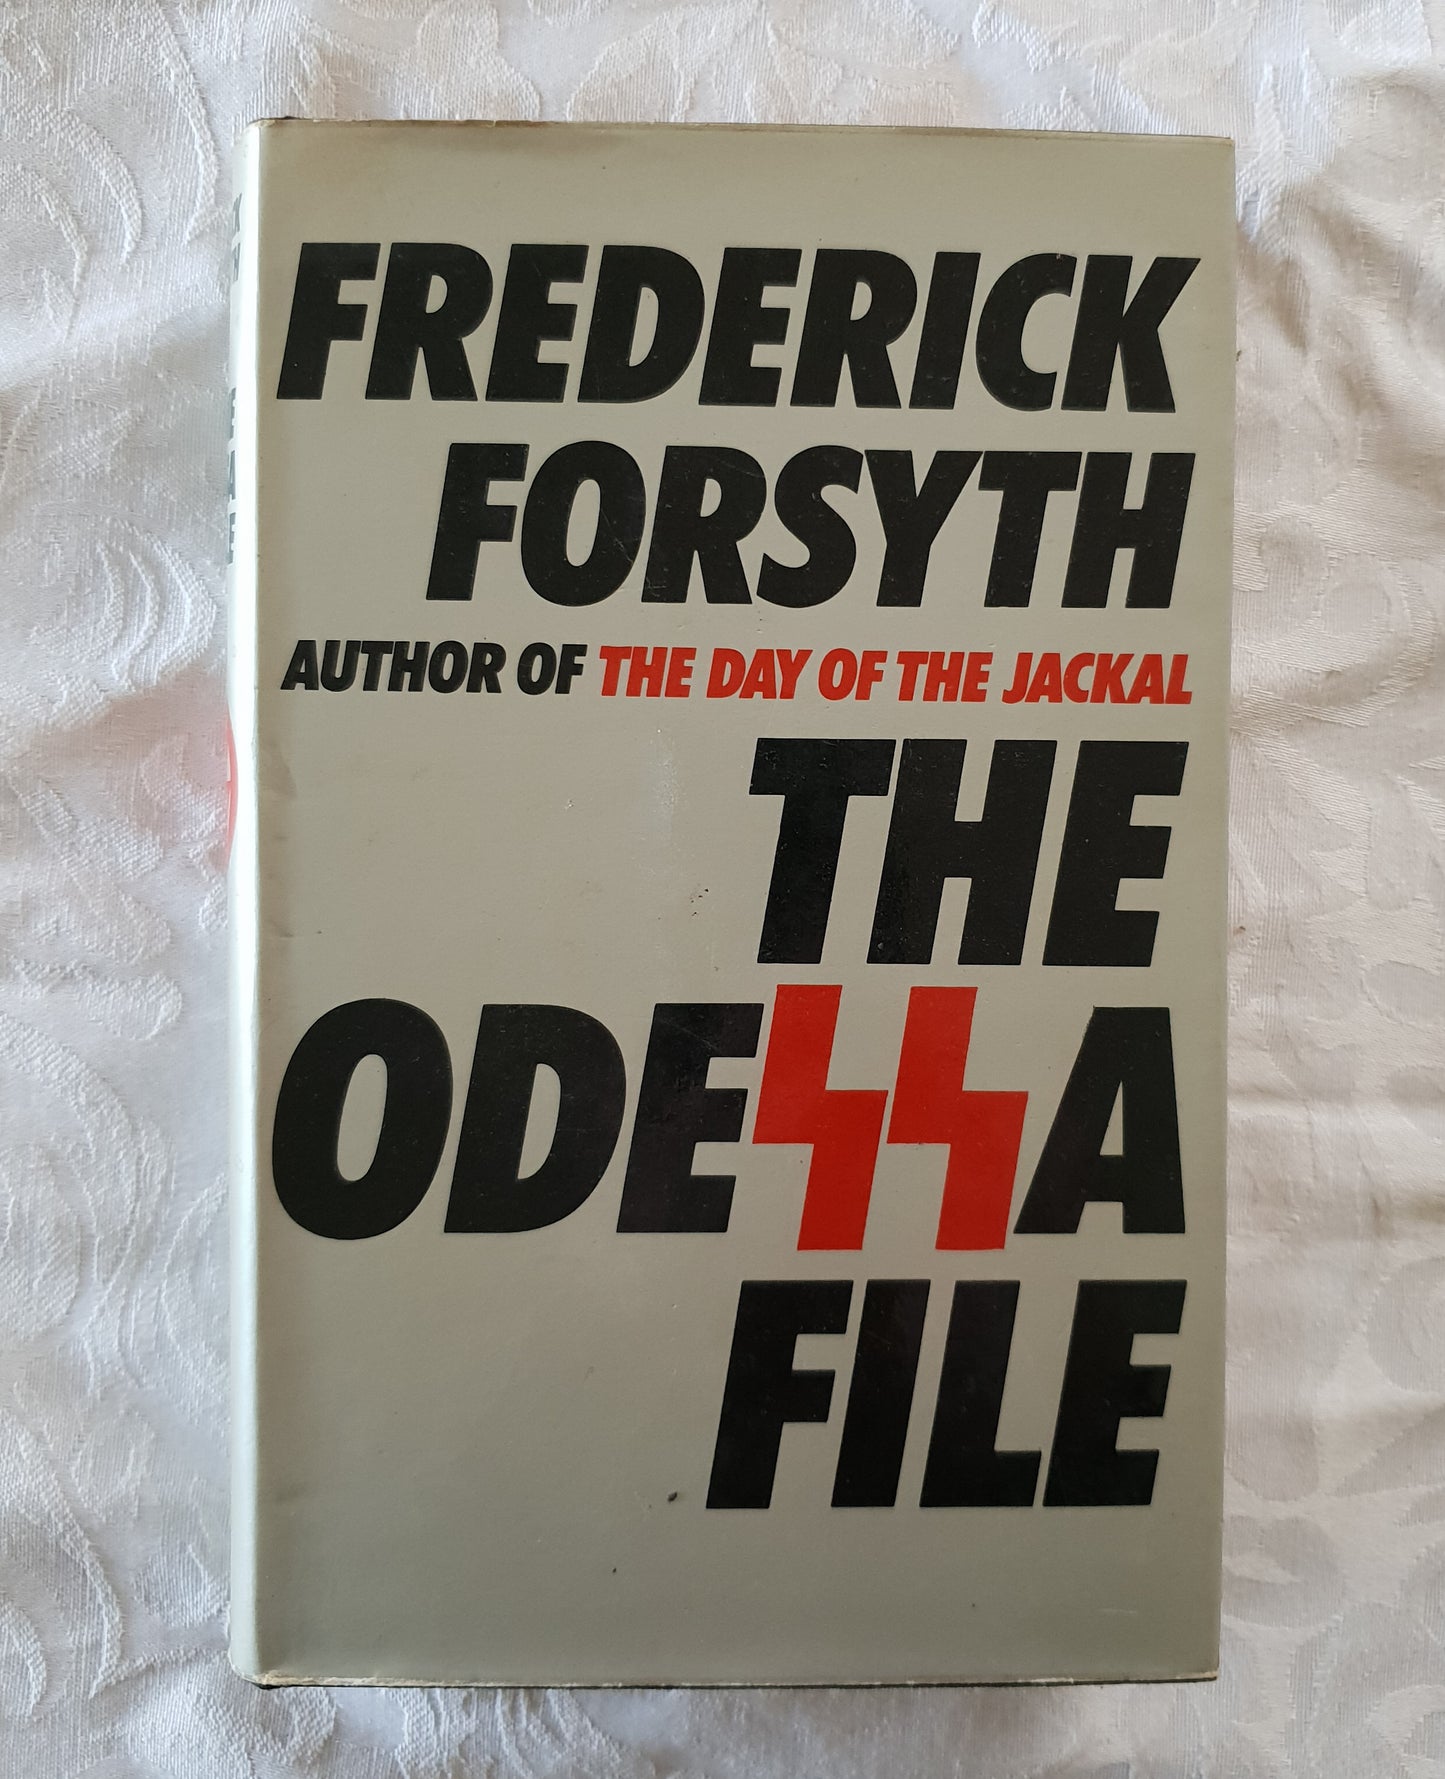 The Odessa File by Frederick Forsyth